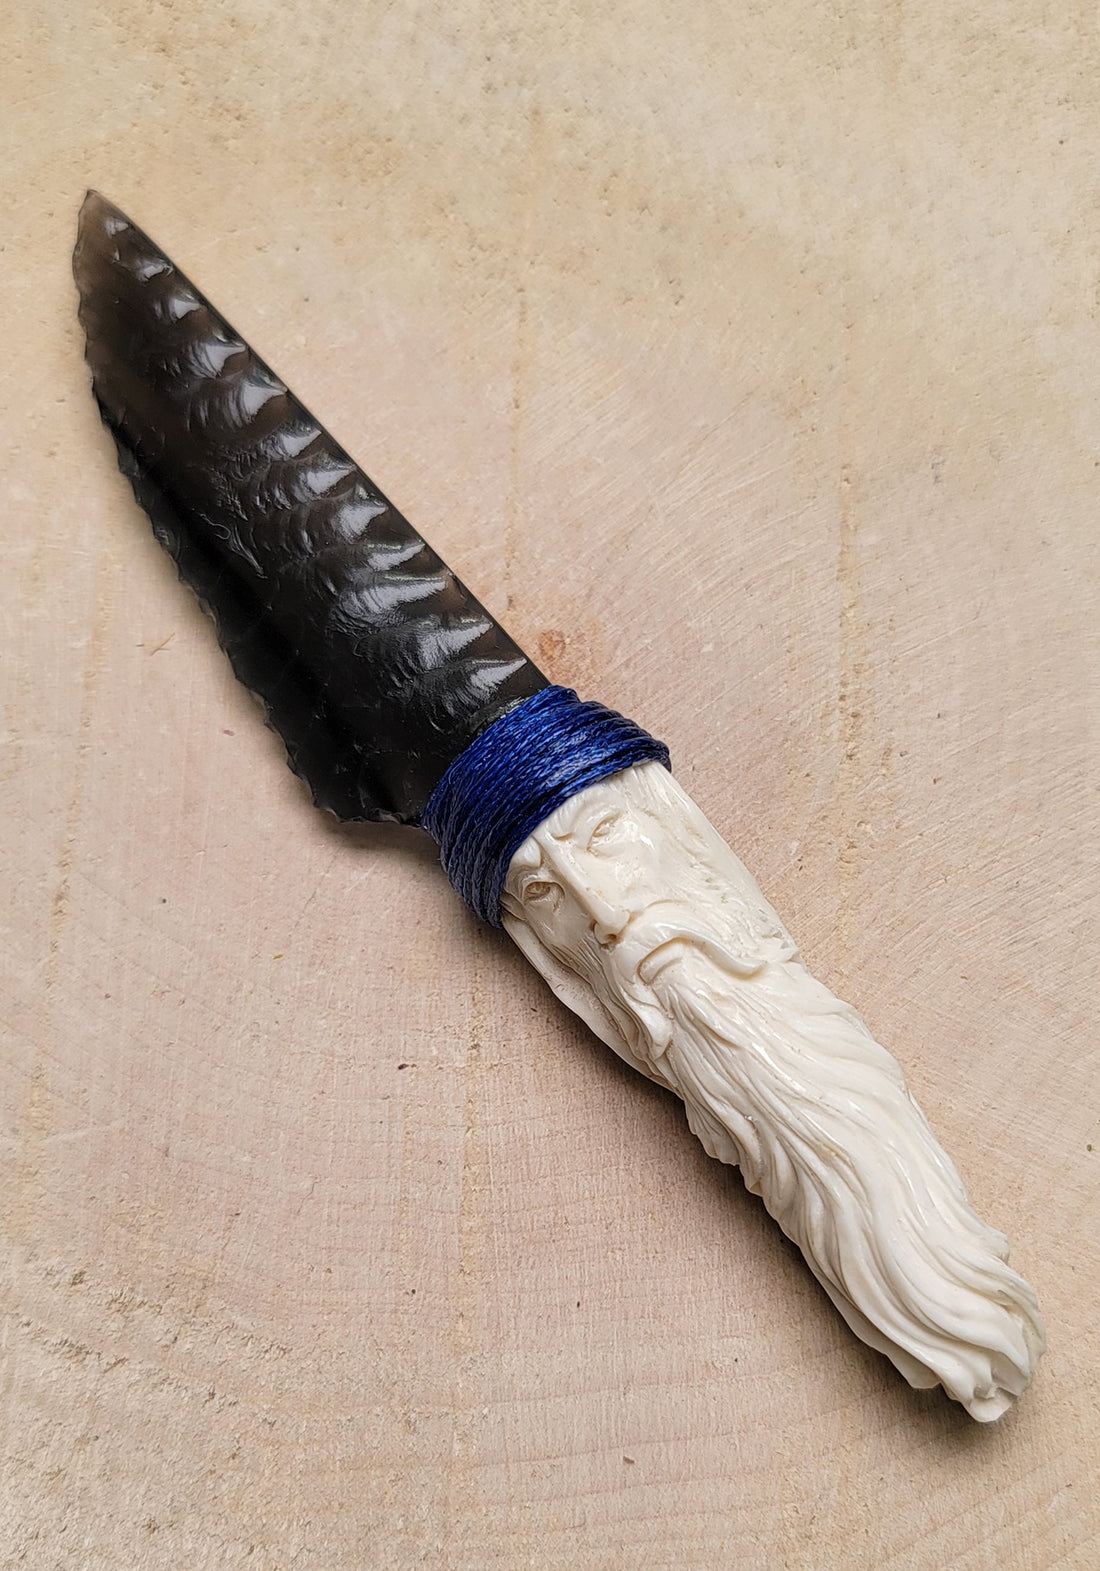 Double Flow Obsidian Polished Gemstone Blade Knife With Carved Antler Handle - Unique!